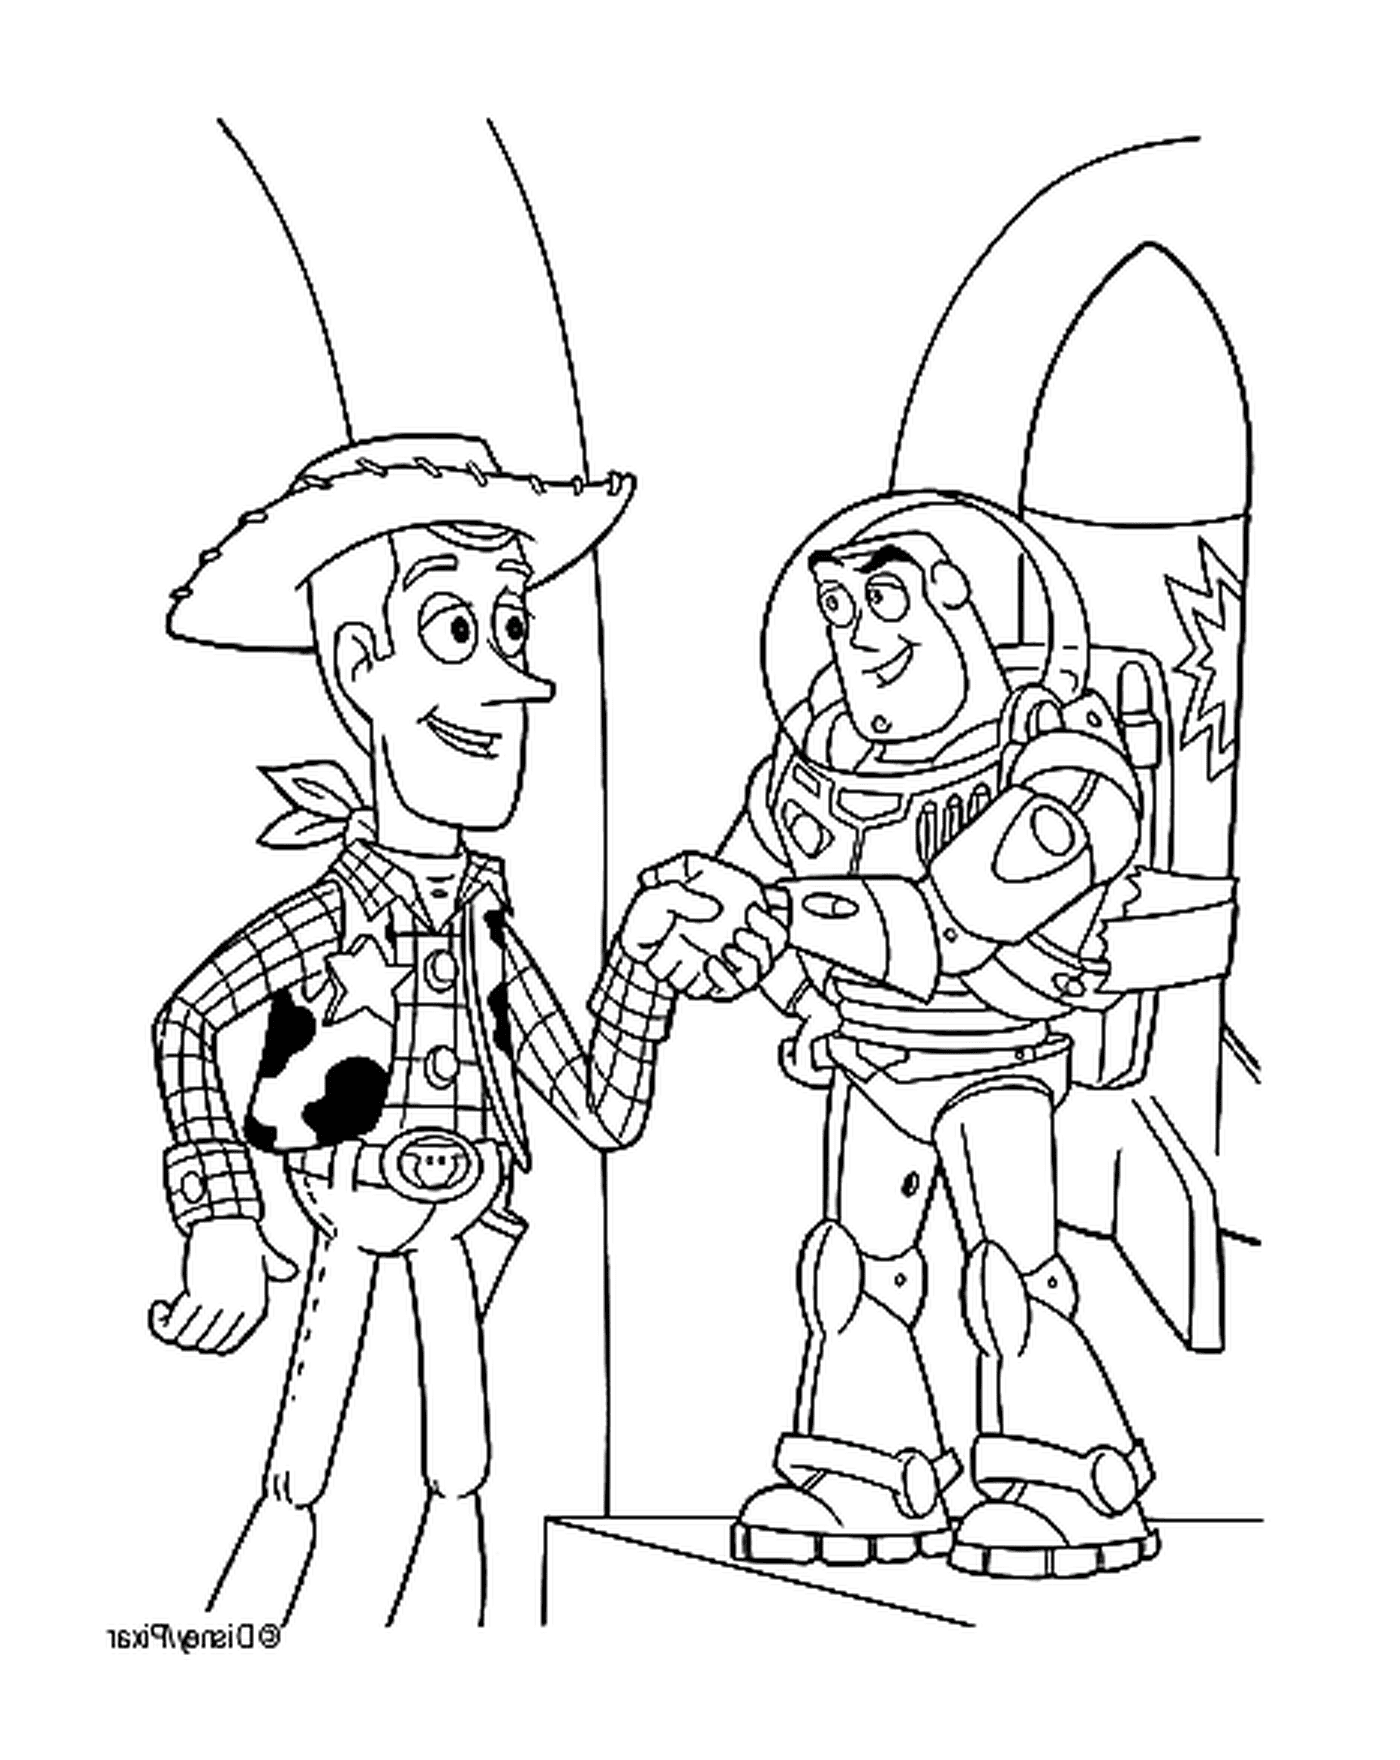  Buzz l'Éclair e Woody, partner leggendari 